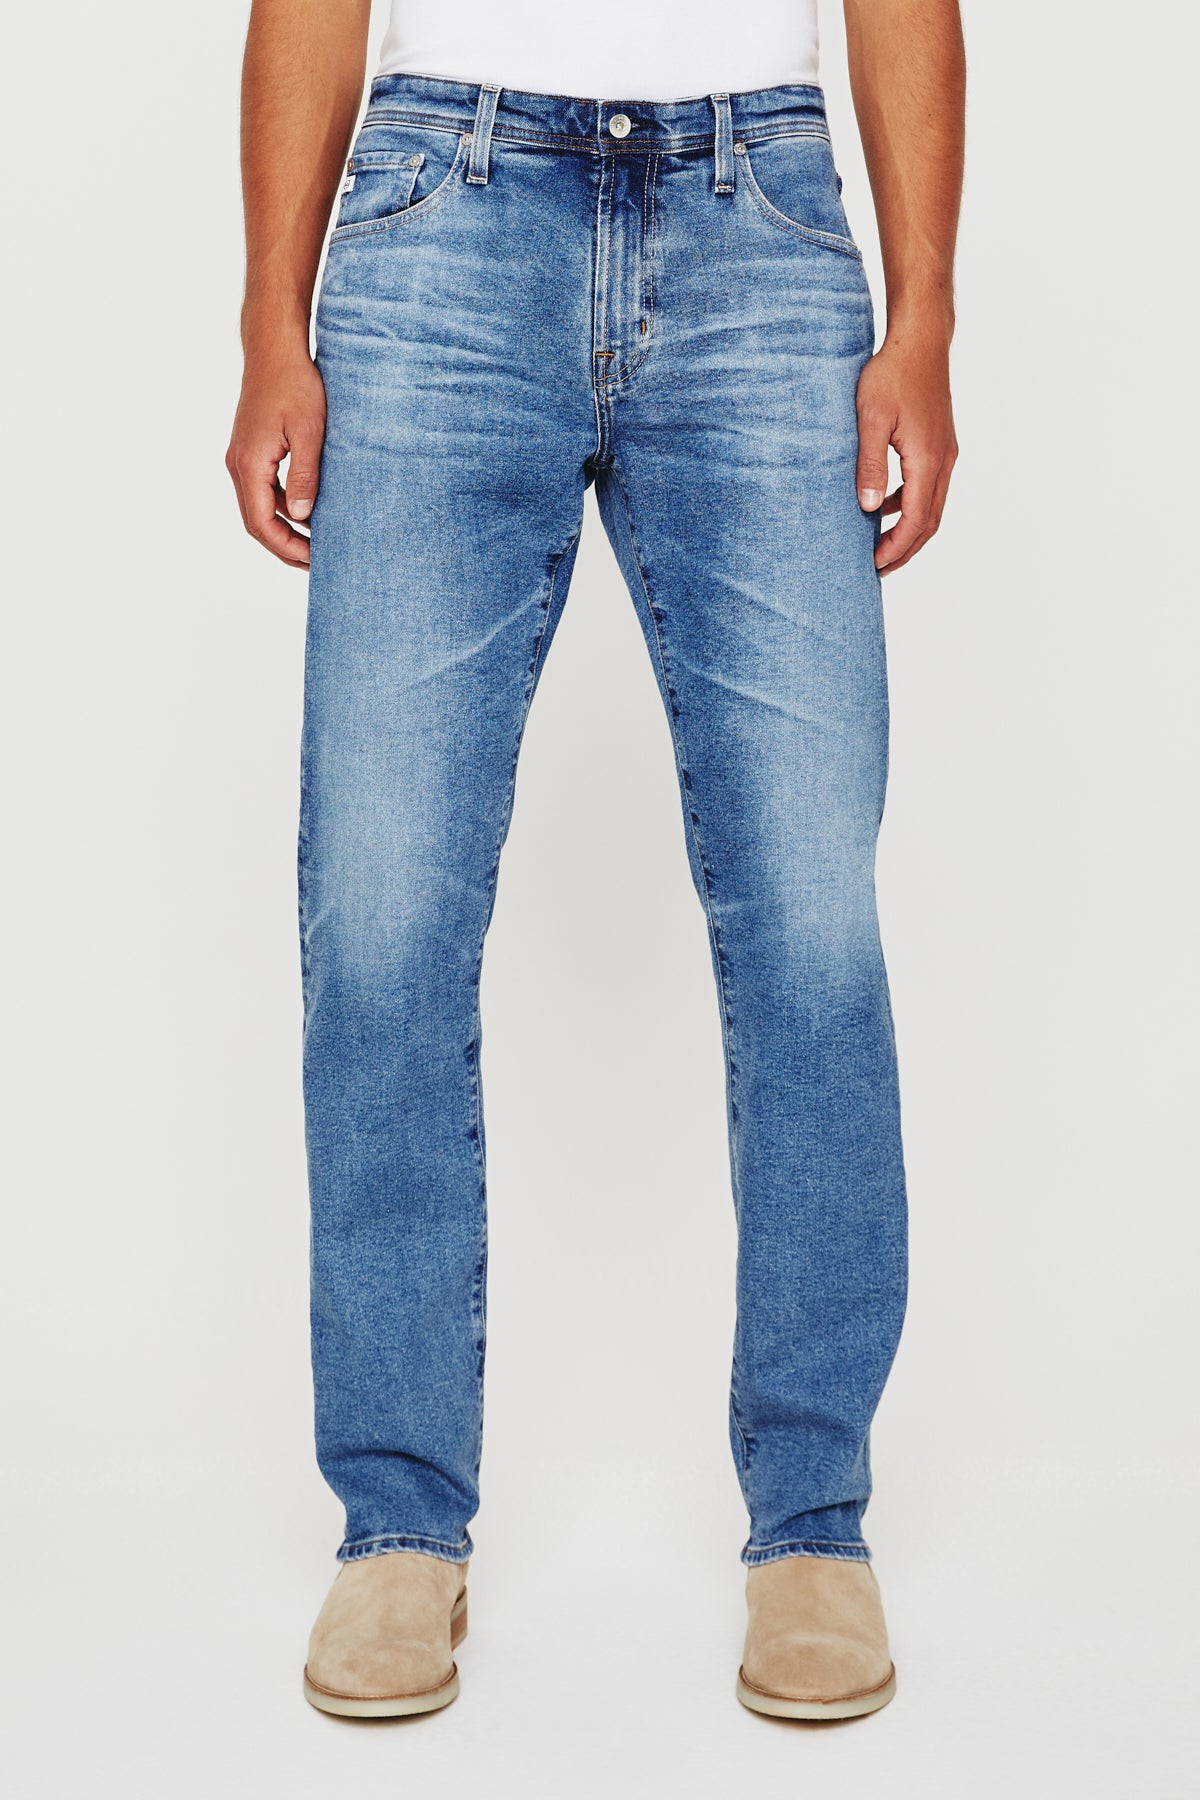 ag jeans dylan slim fit jean in vp la presa blue, front view